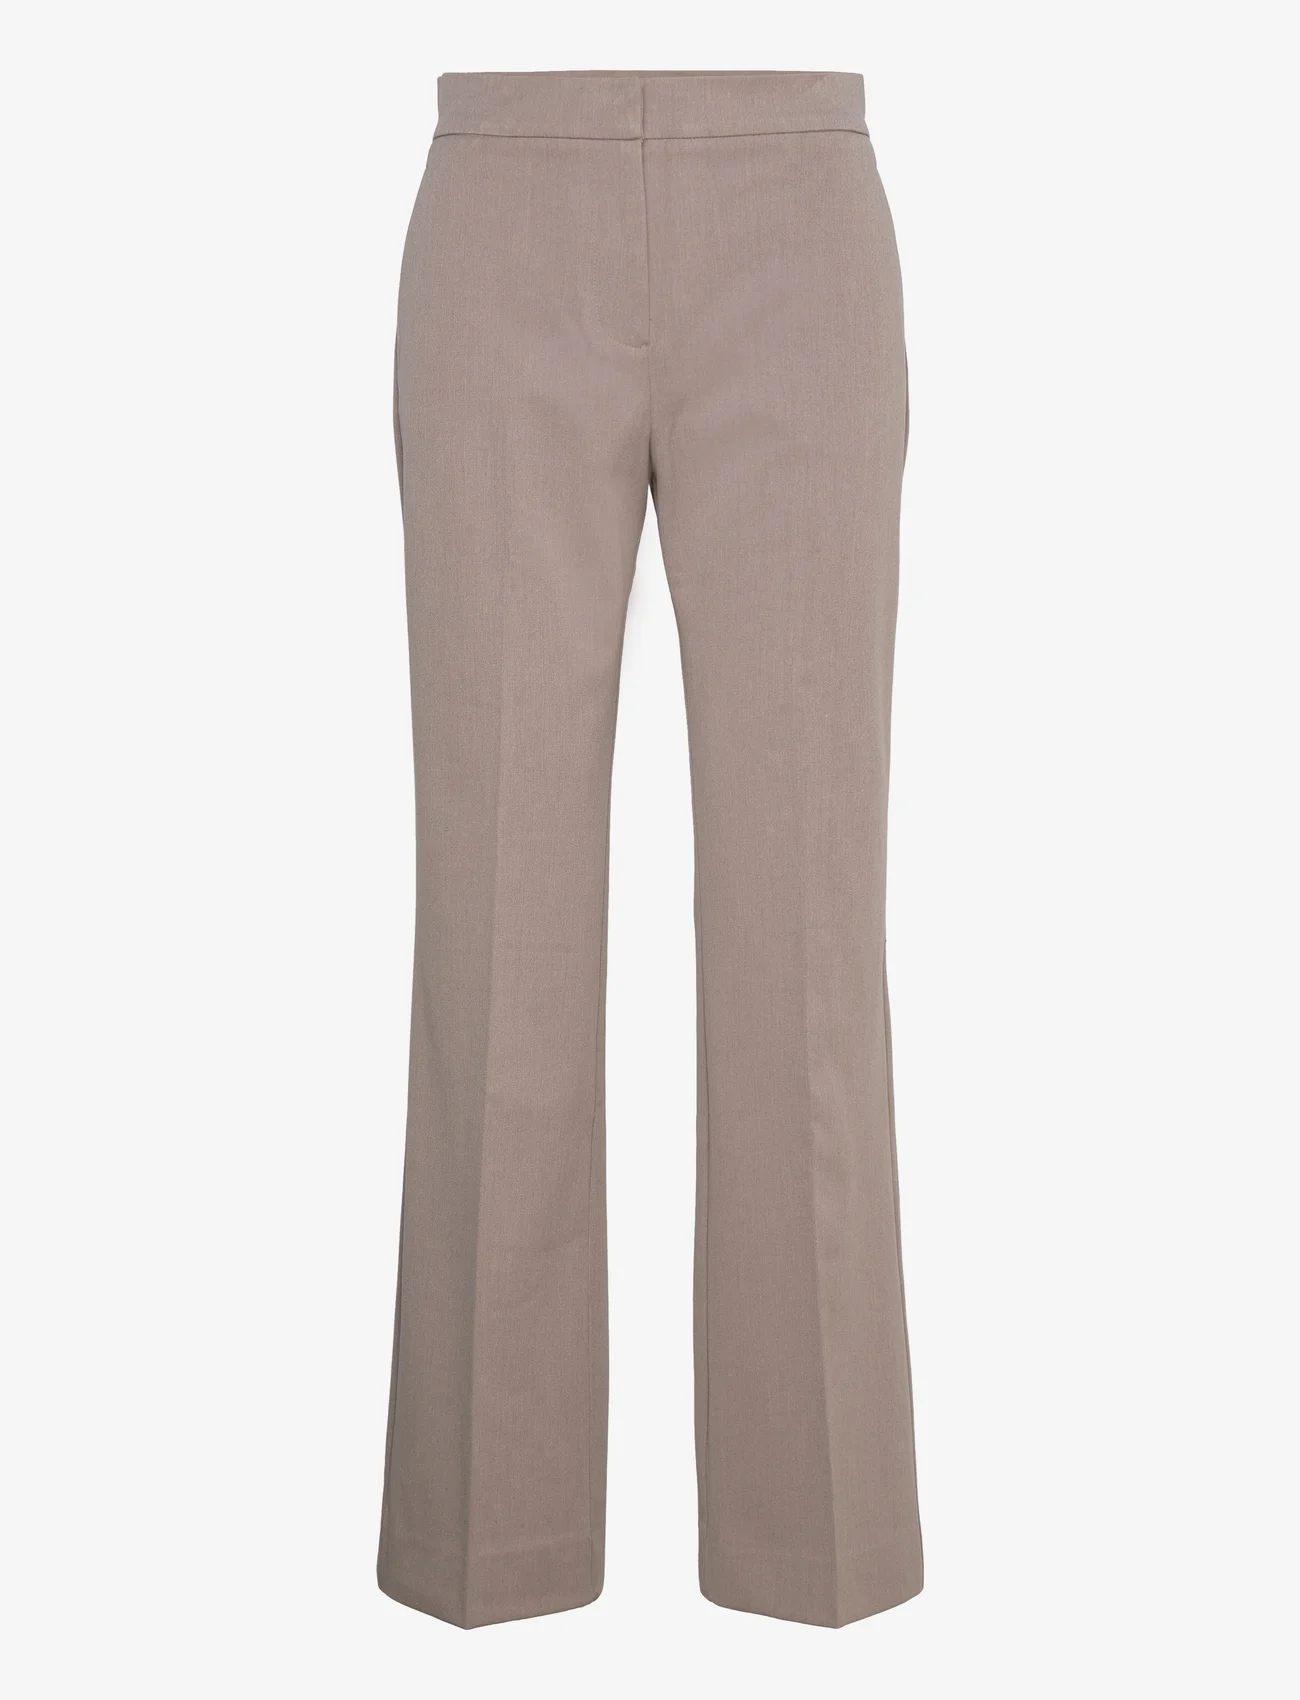 Mango - Mid-rise wideleg trousers - dressbukser - medium brown - 0